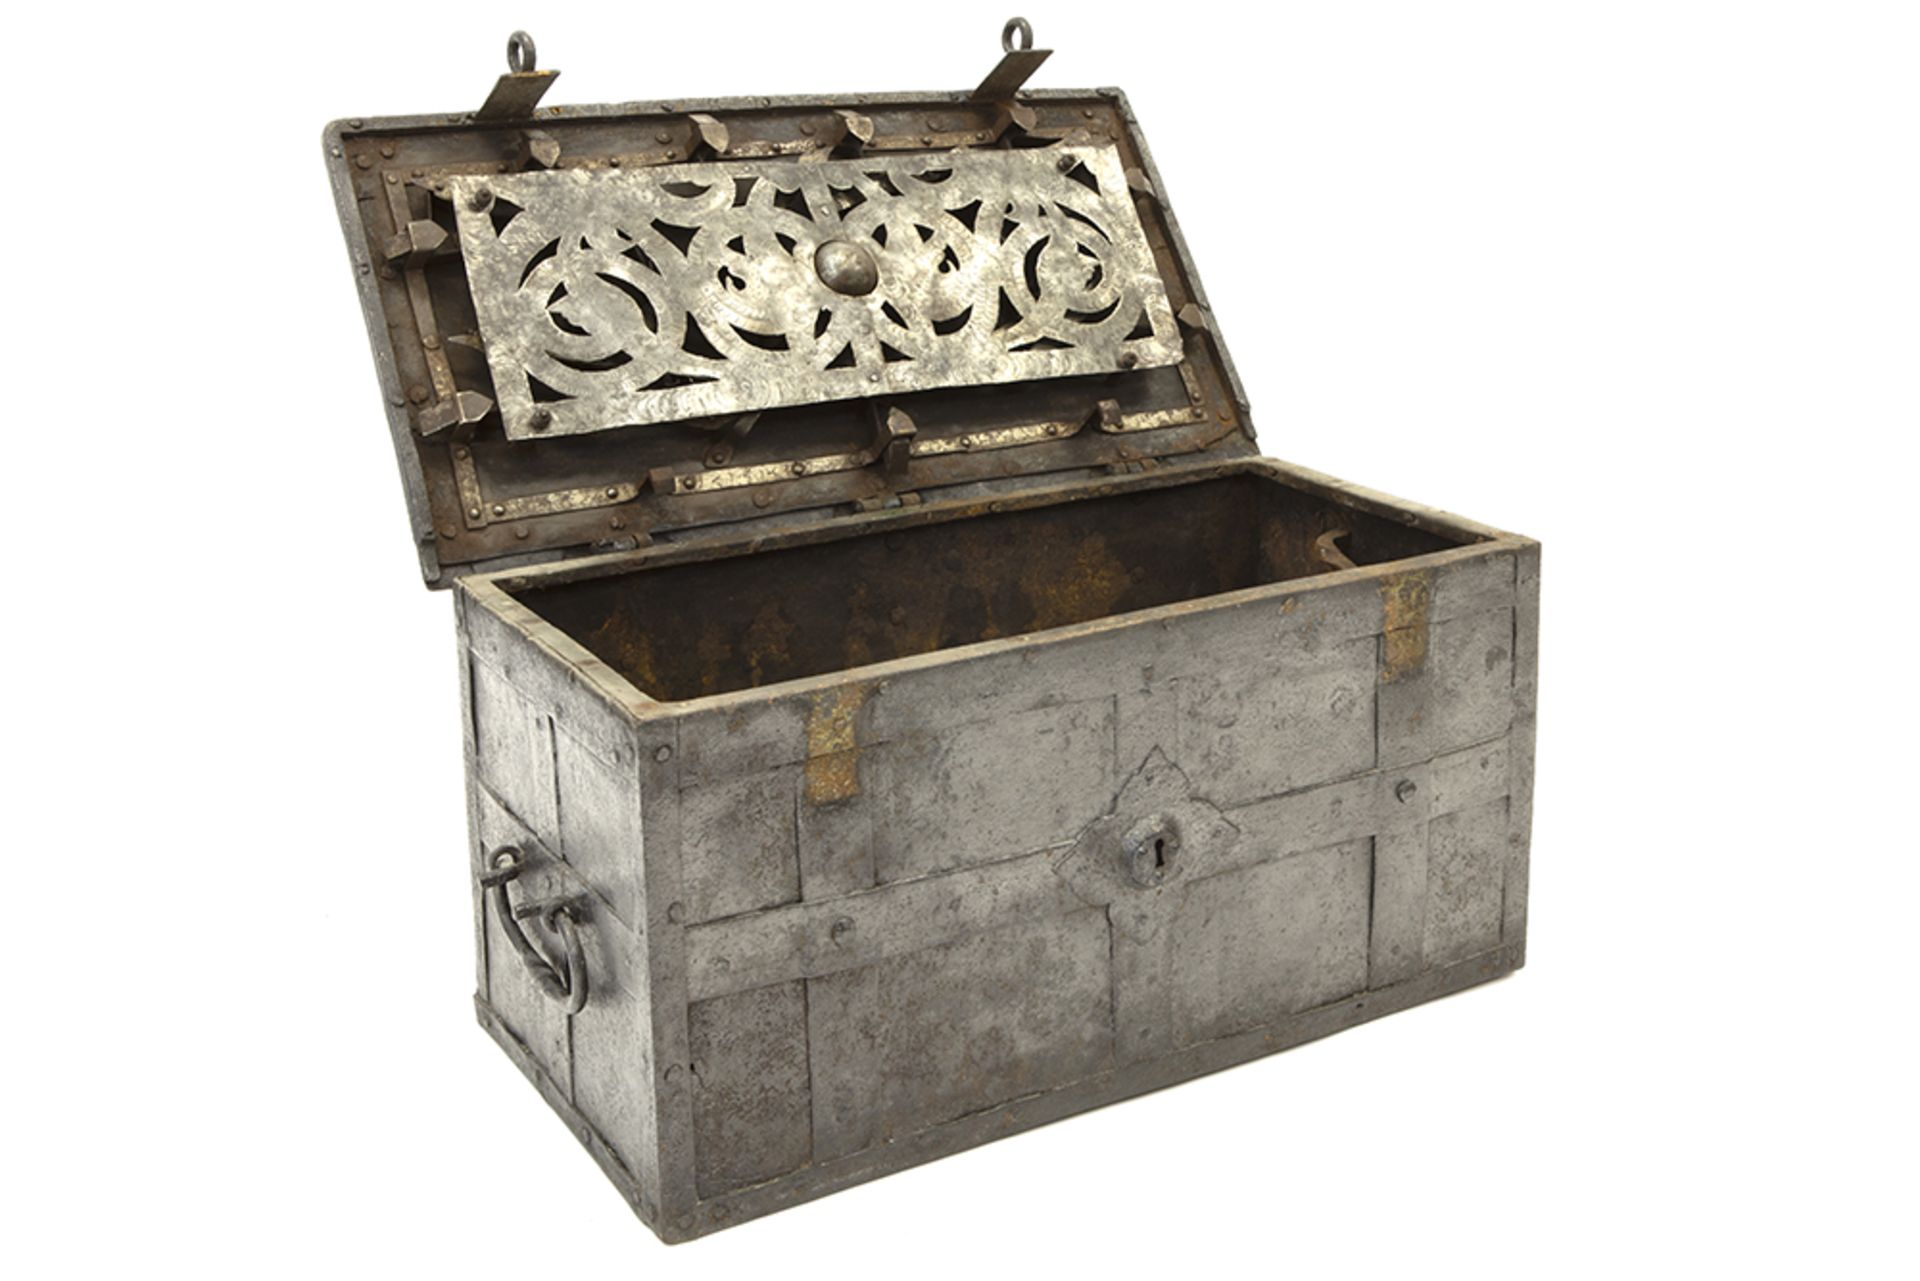 17th/18th Cent. iron chest with a nice lock || Zeventiende/achttiende eeuwse ijzeren kist met een - Image 2 of 4